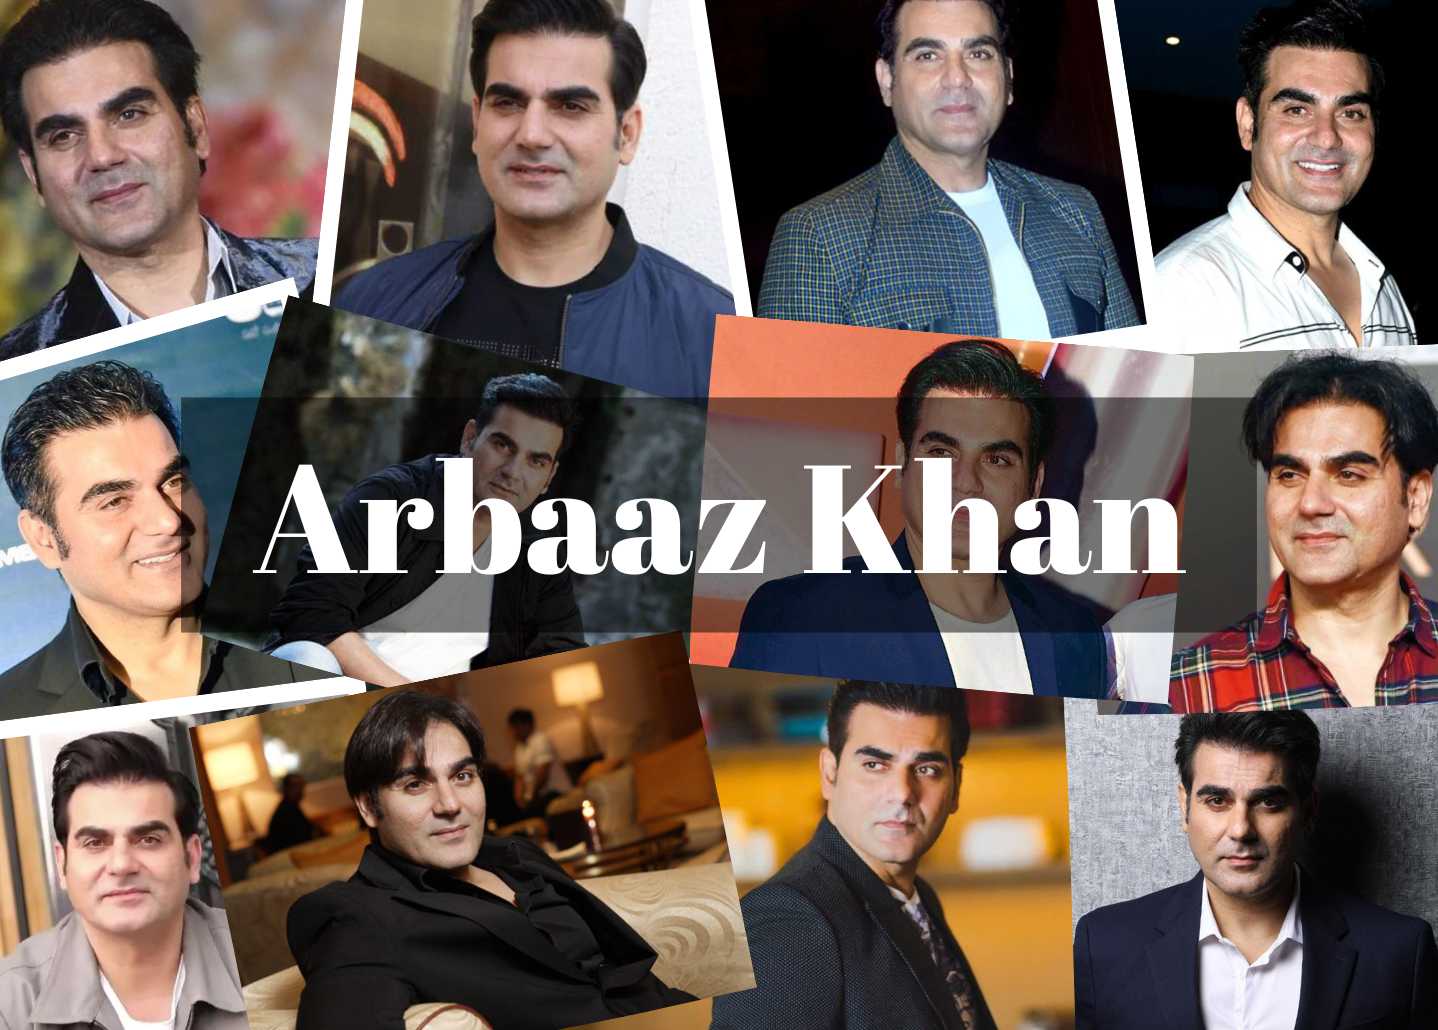 Arbaaz Khan Movies, Age, Biography, Height, Net Worth